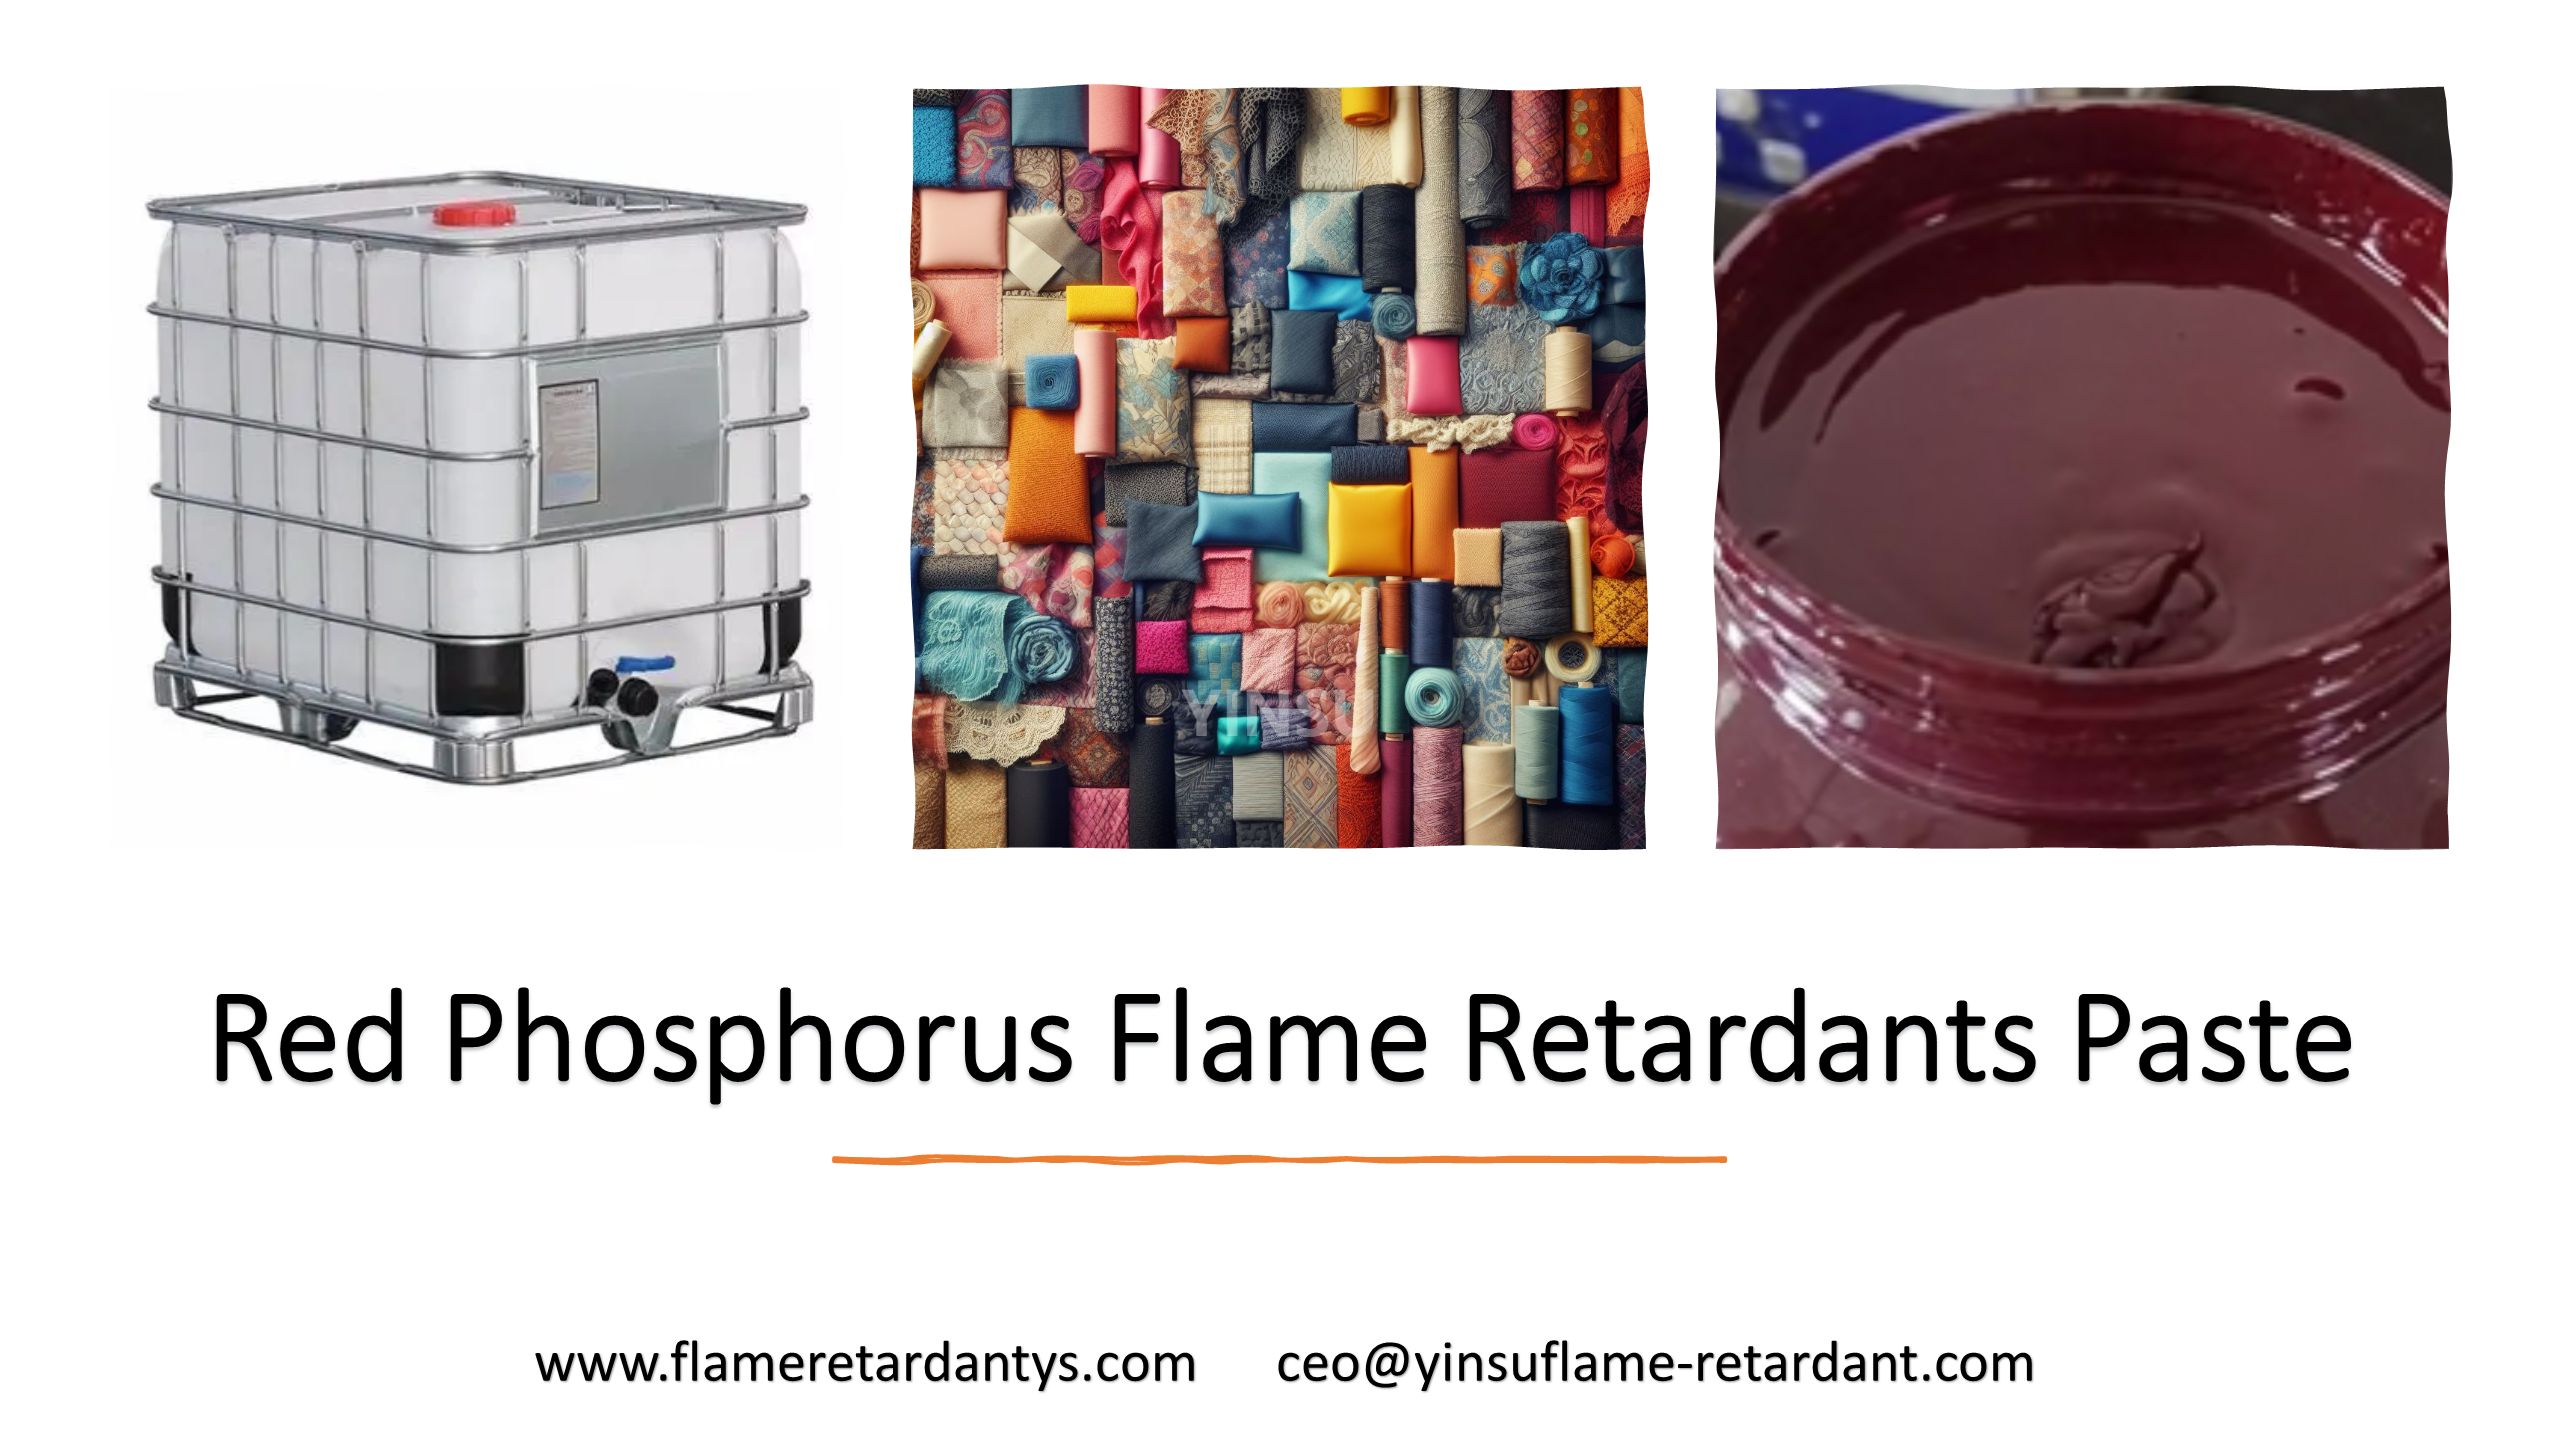 Red Phosphorus Flame Retardants Paste